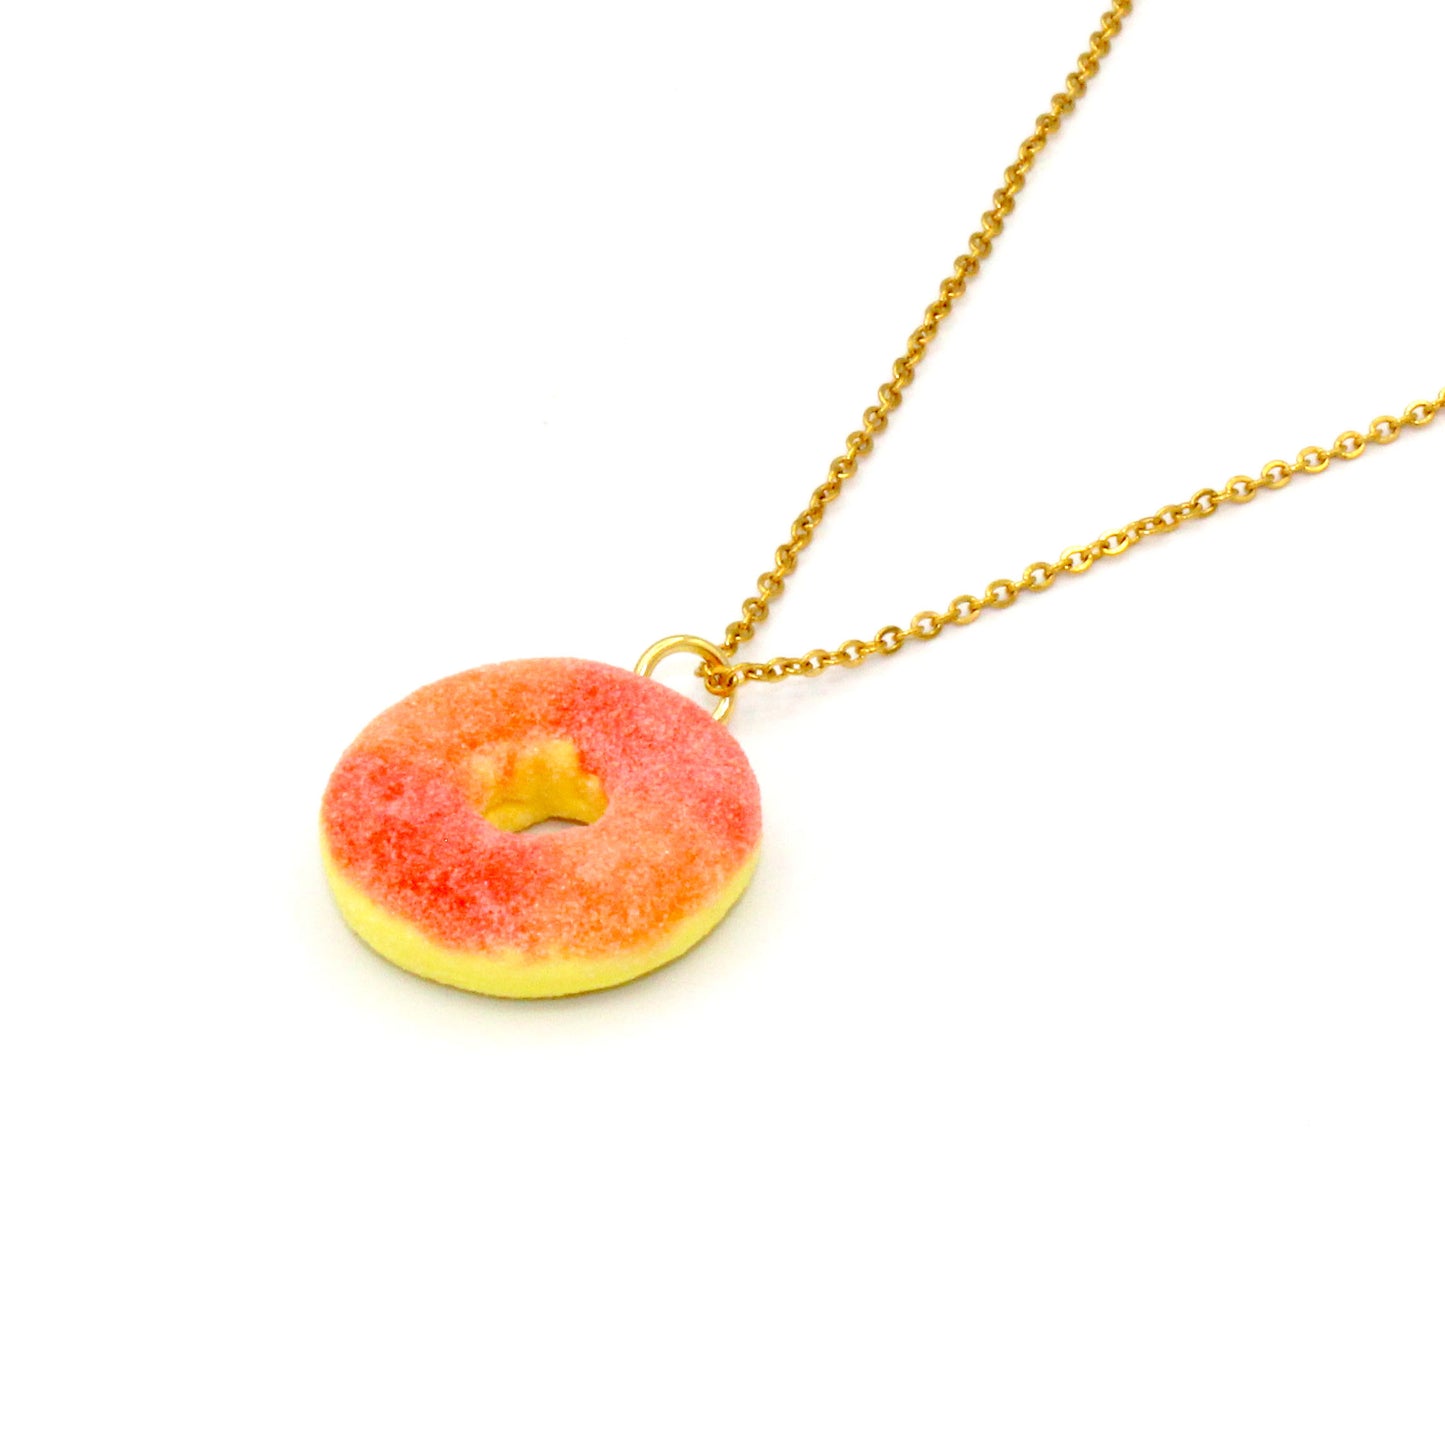 Gummy Peach Ring Necklace - Gold or Silver - Fatally Feminine Designs